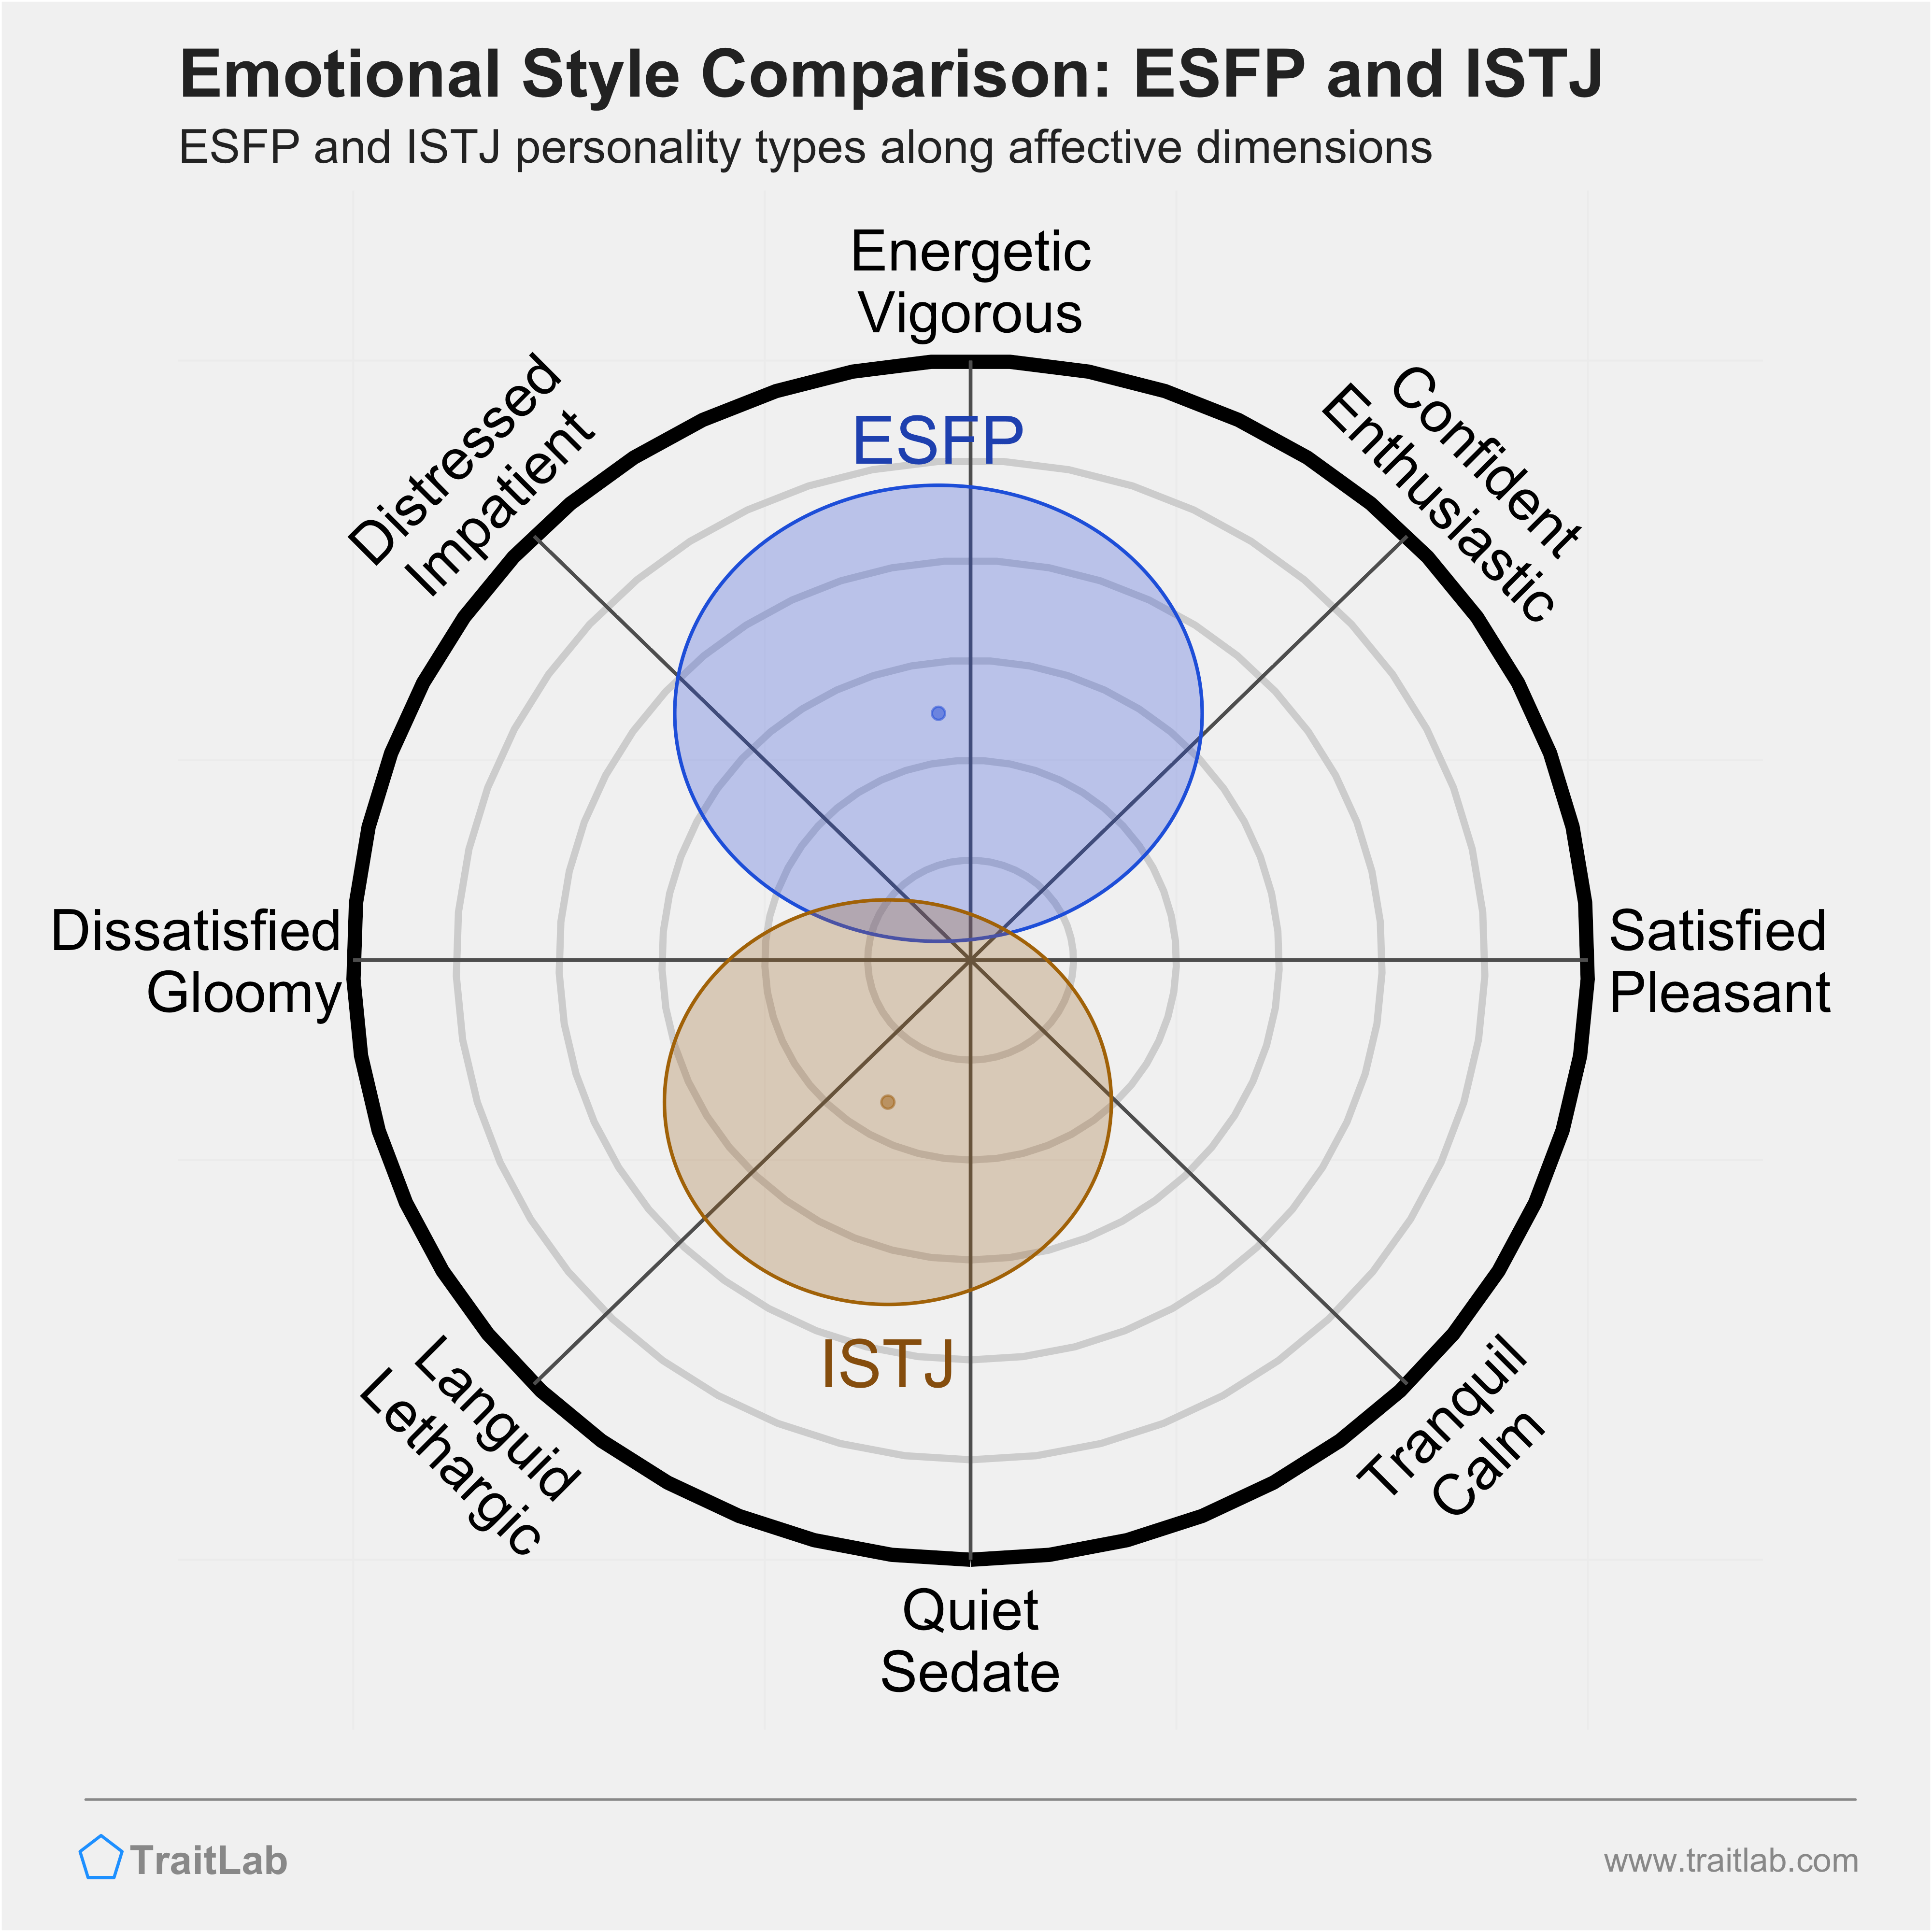 ESFP and ISTJ comparison across emotional (affective) dimensions